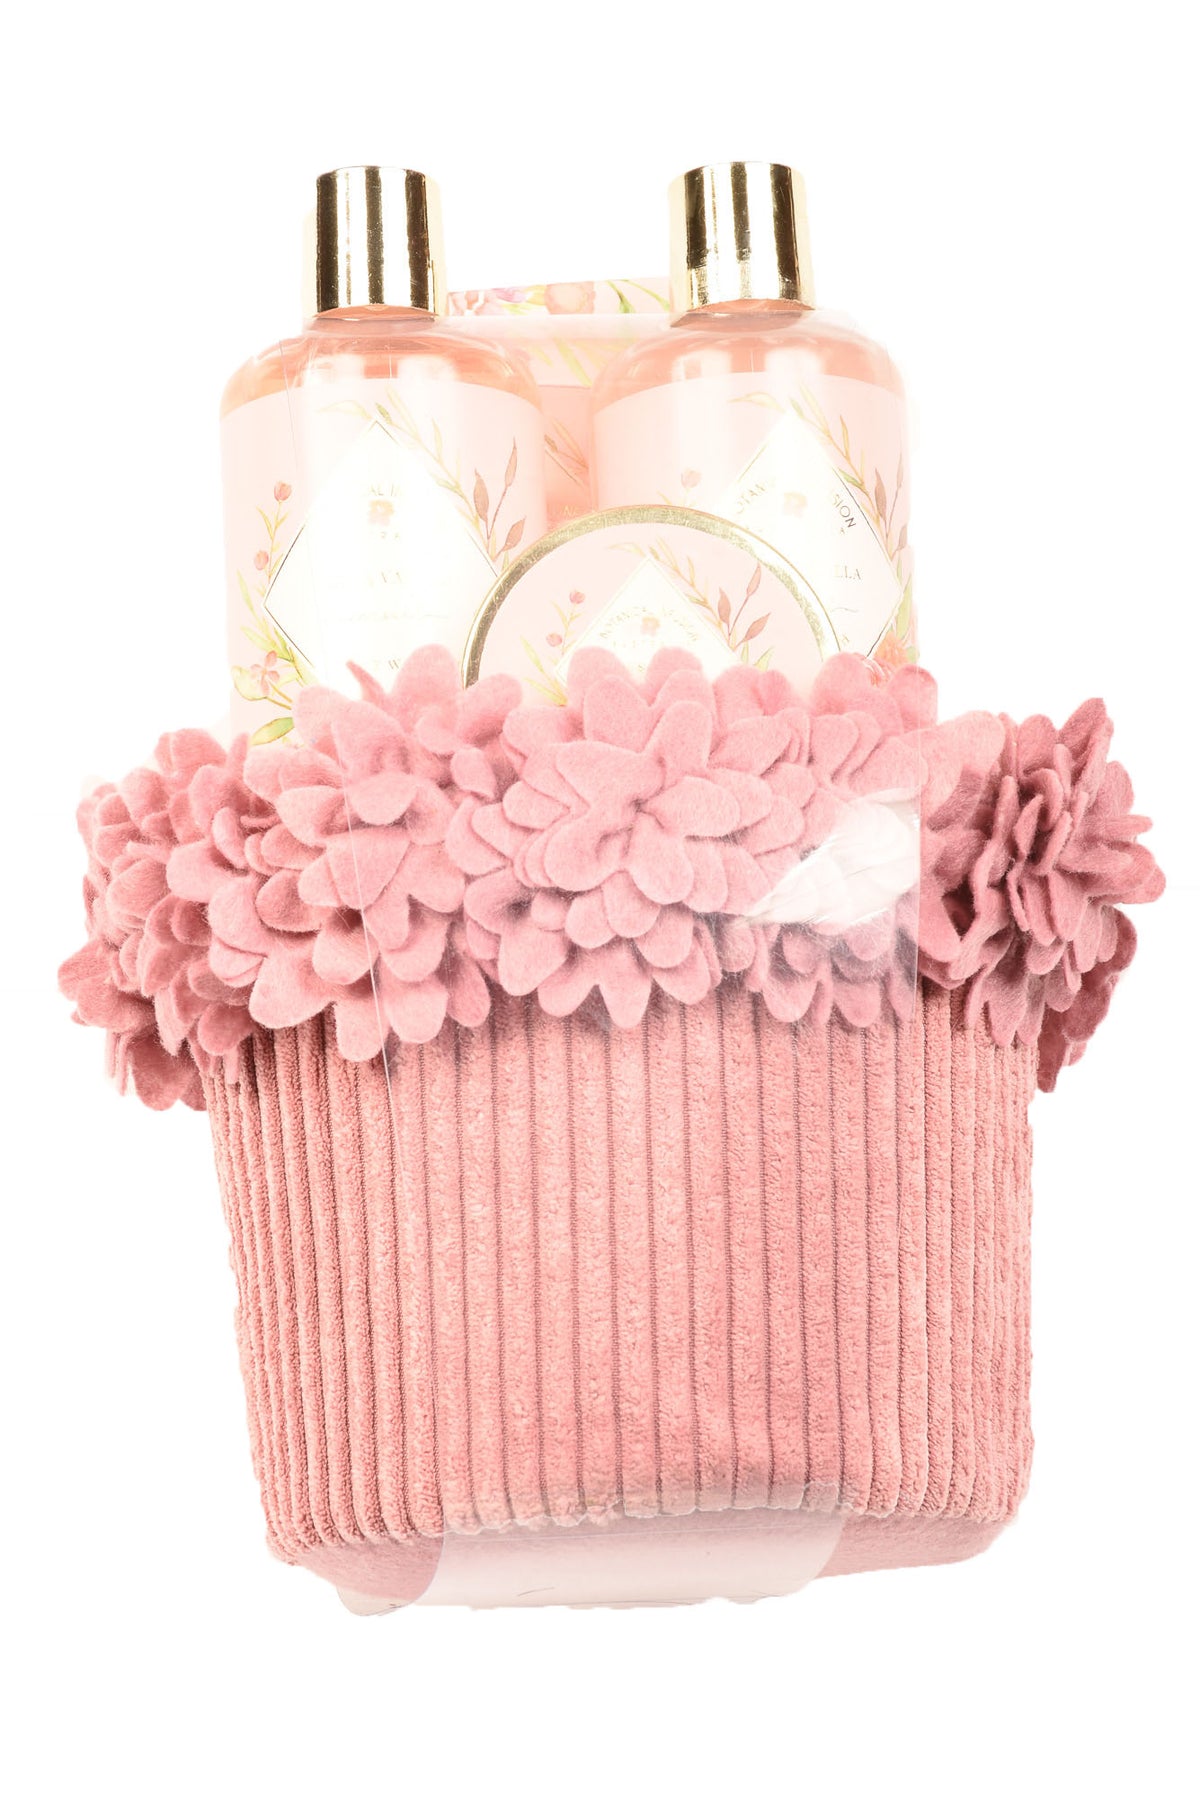 Organic extract gift set for baking - full rainbow – Pink Lemon Shop